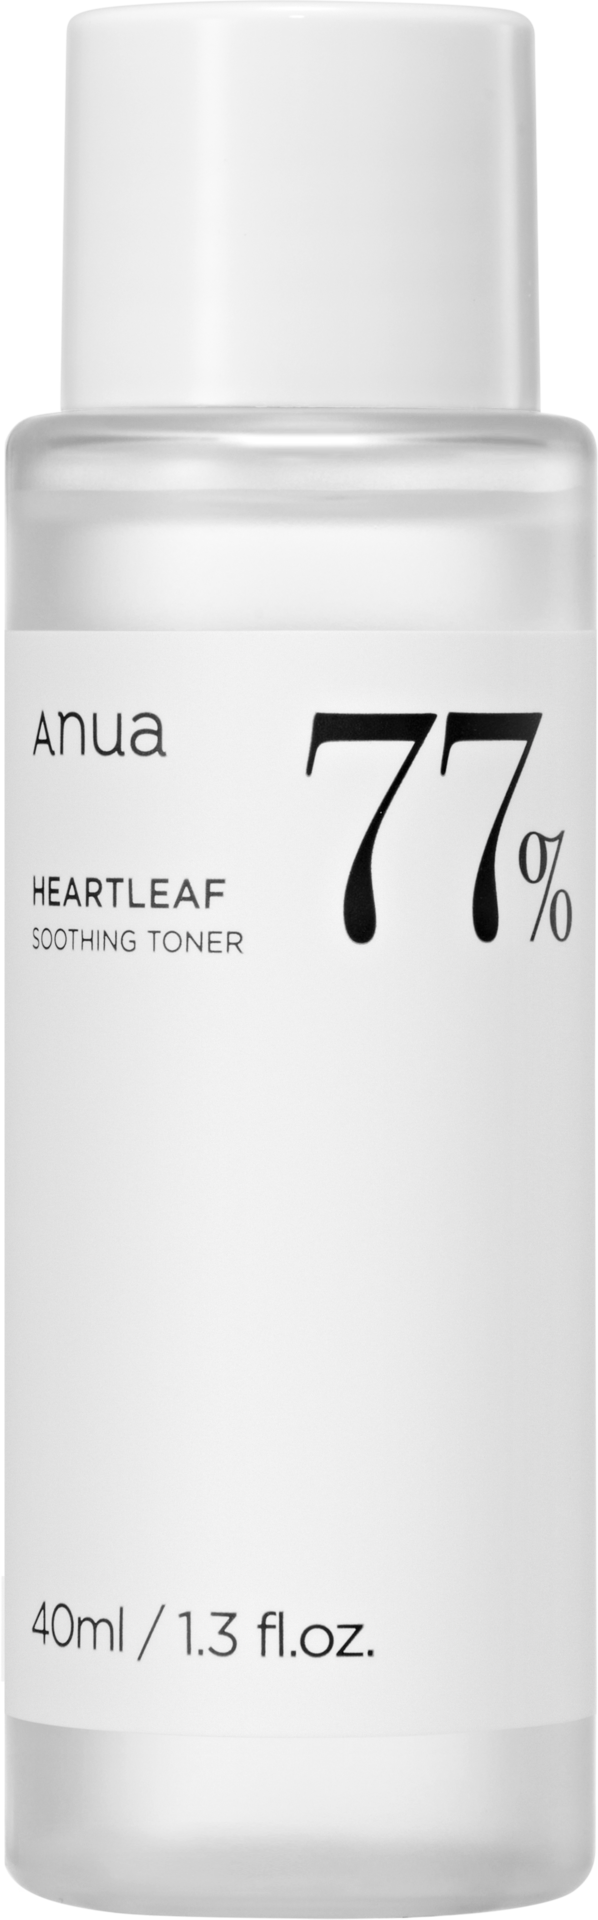 Anua Heartleaf 77% Soothing Toner 40ml